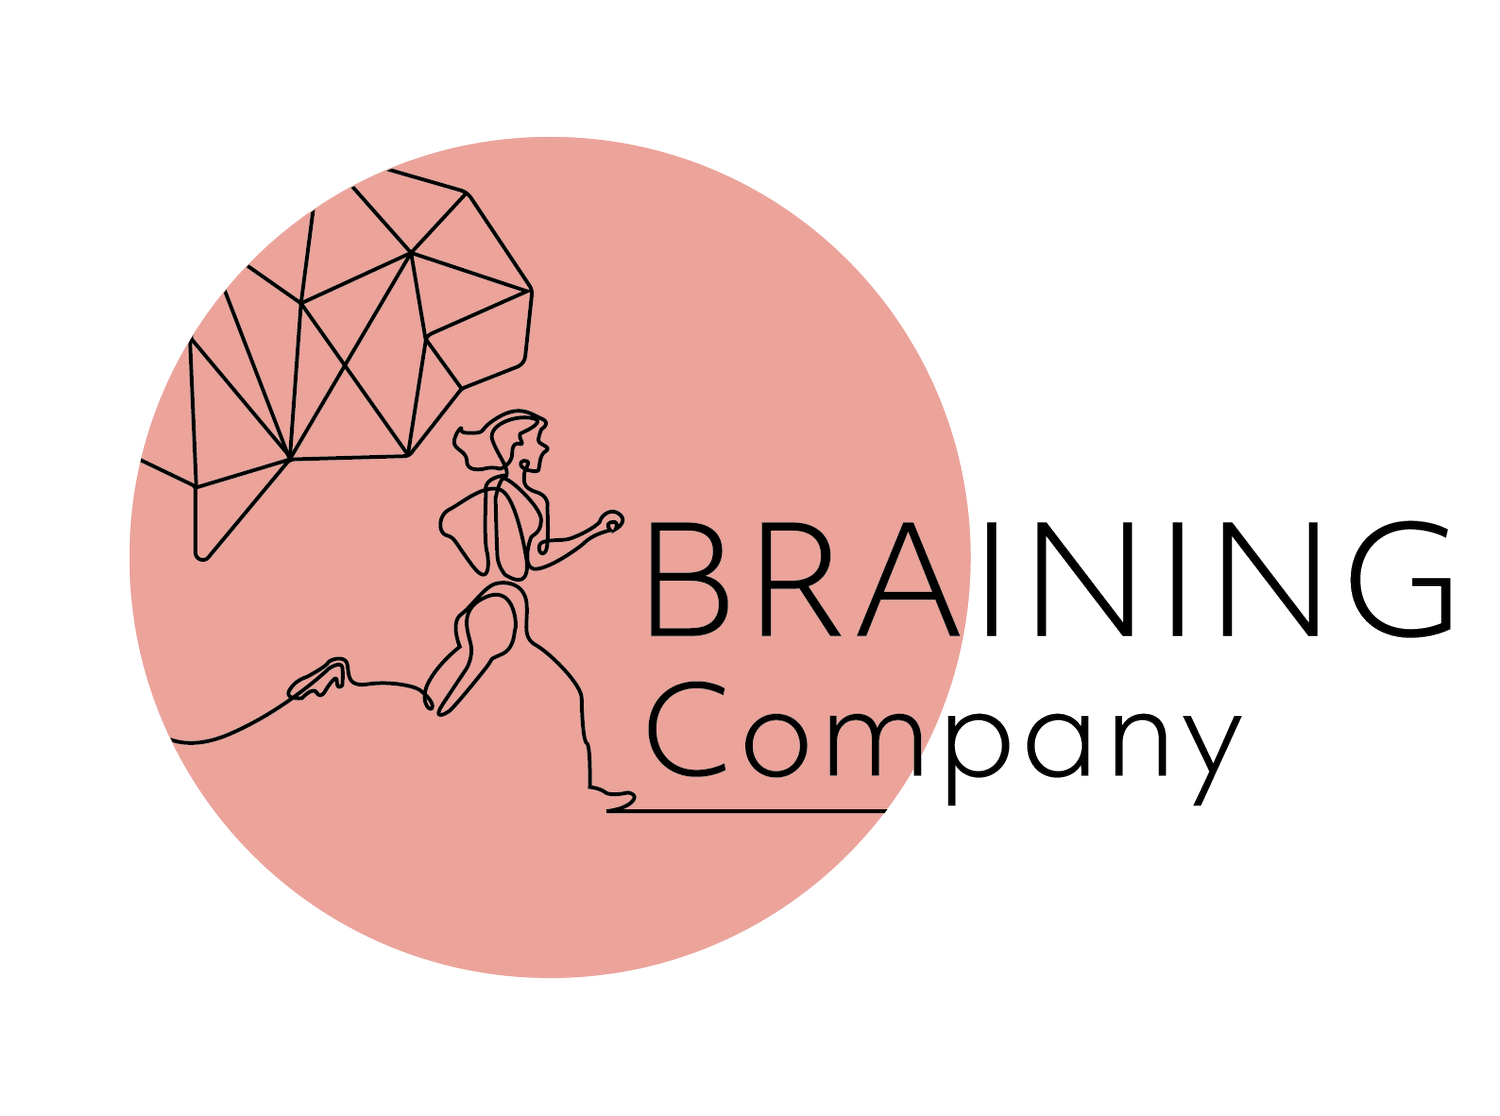 Braining Company